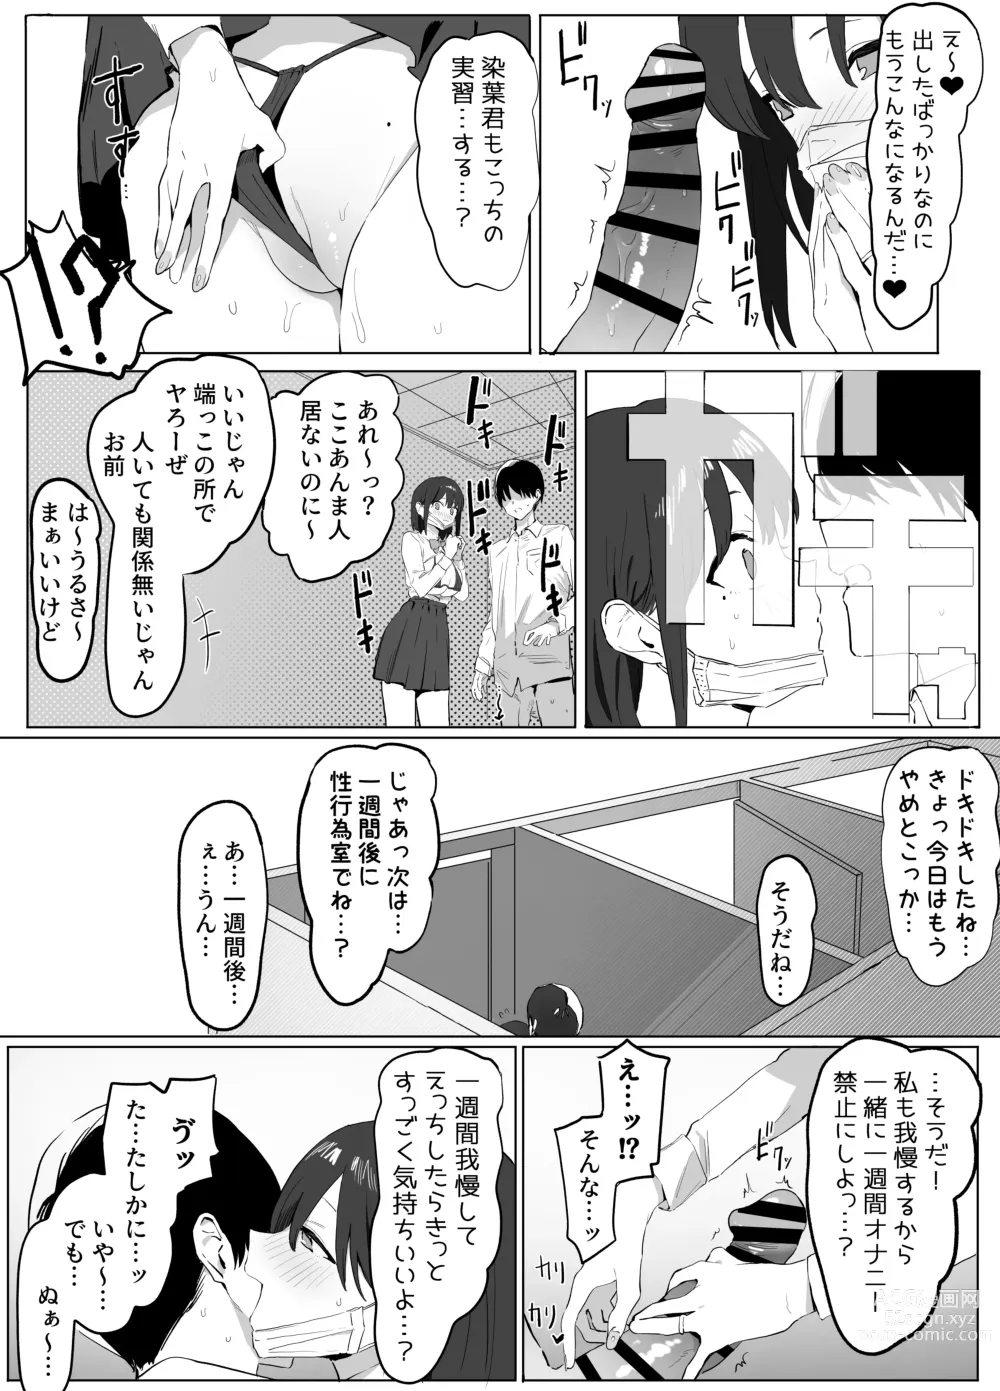 Page 13 of doujinshi Seikoui Jisshuu!